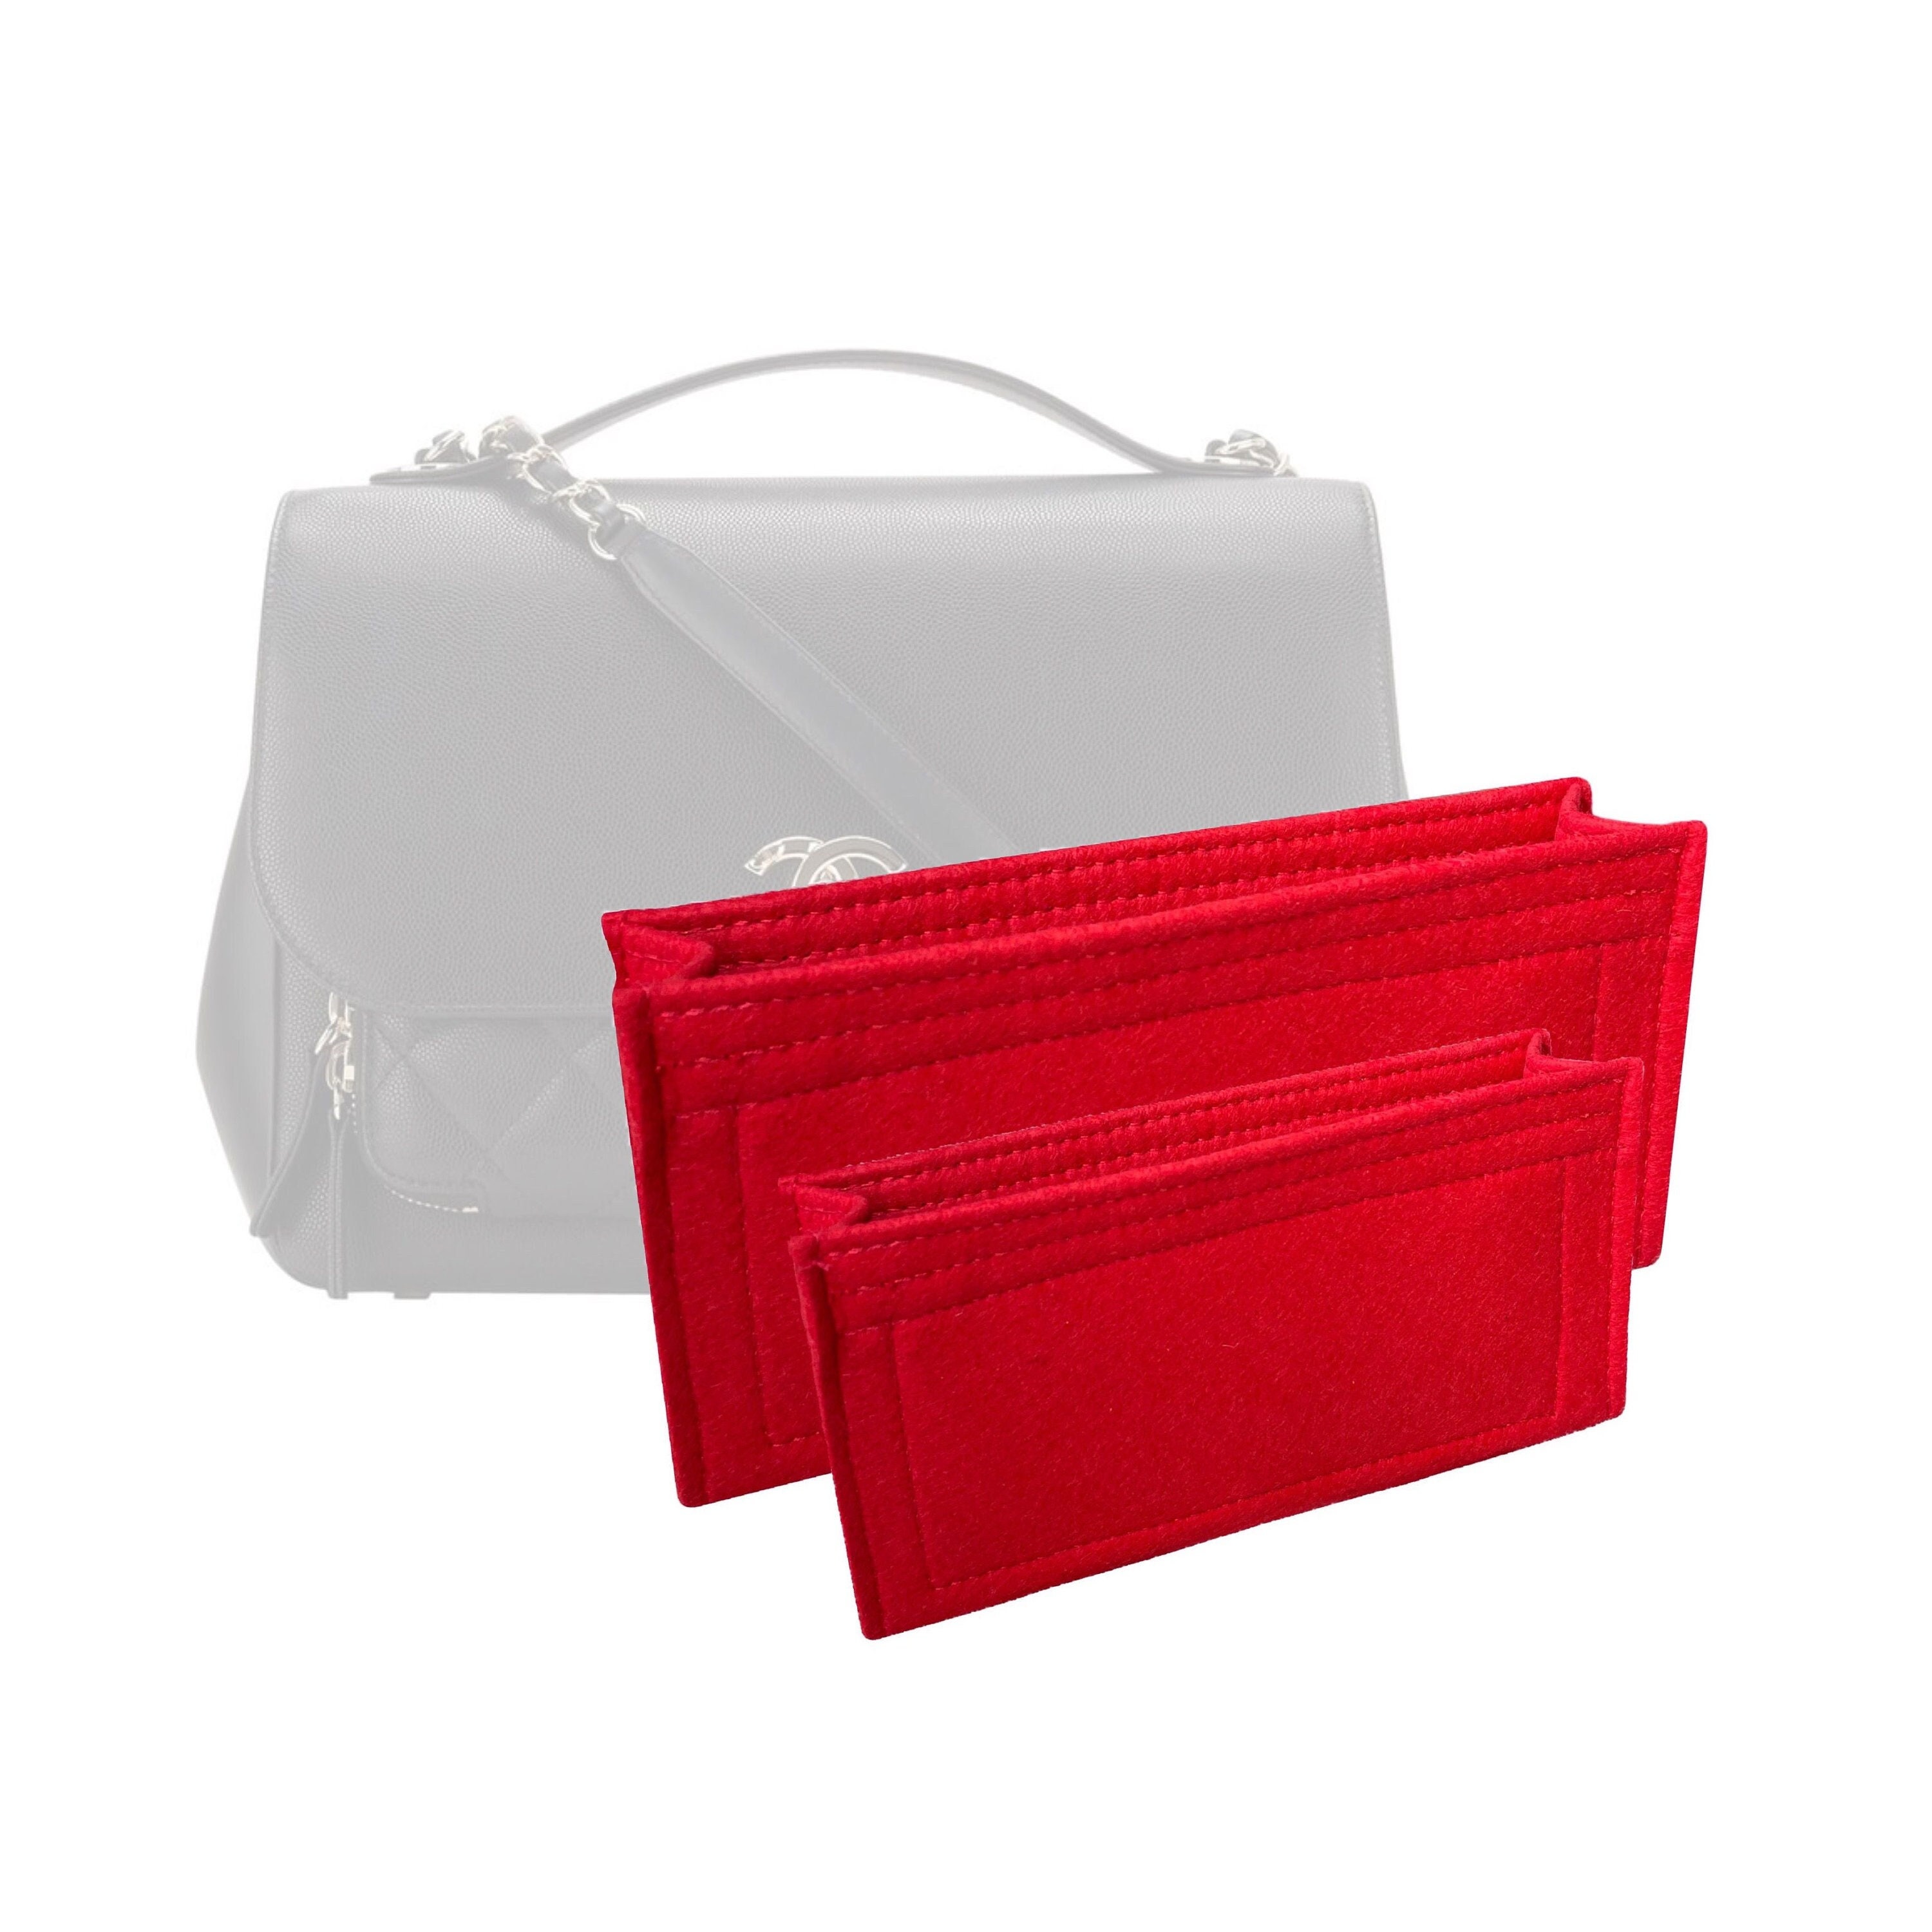 Bag Insert Base / Side Protector Saver Shaper ontworpen voor C H A N E L Wallet On Chain Tas NIET inbegrepen woc Tassen & portemonnees Handtassen Handtasinzetten 